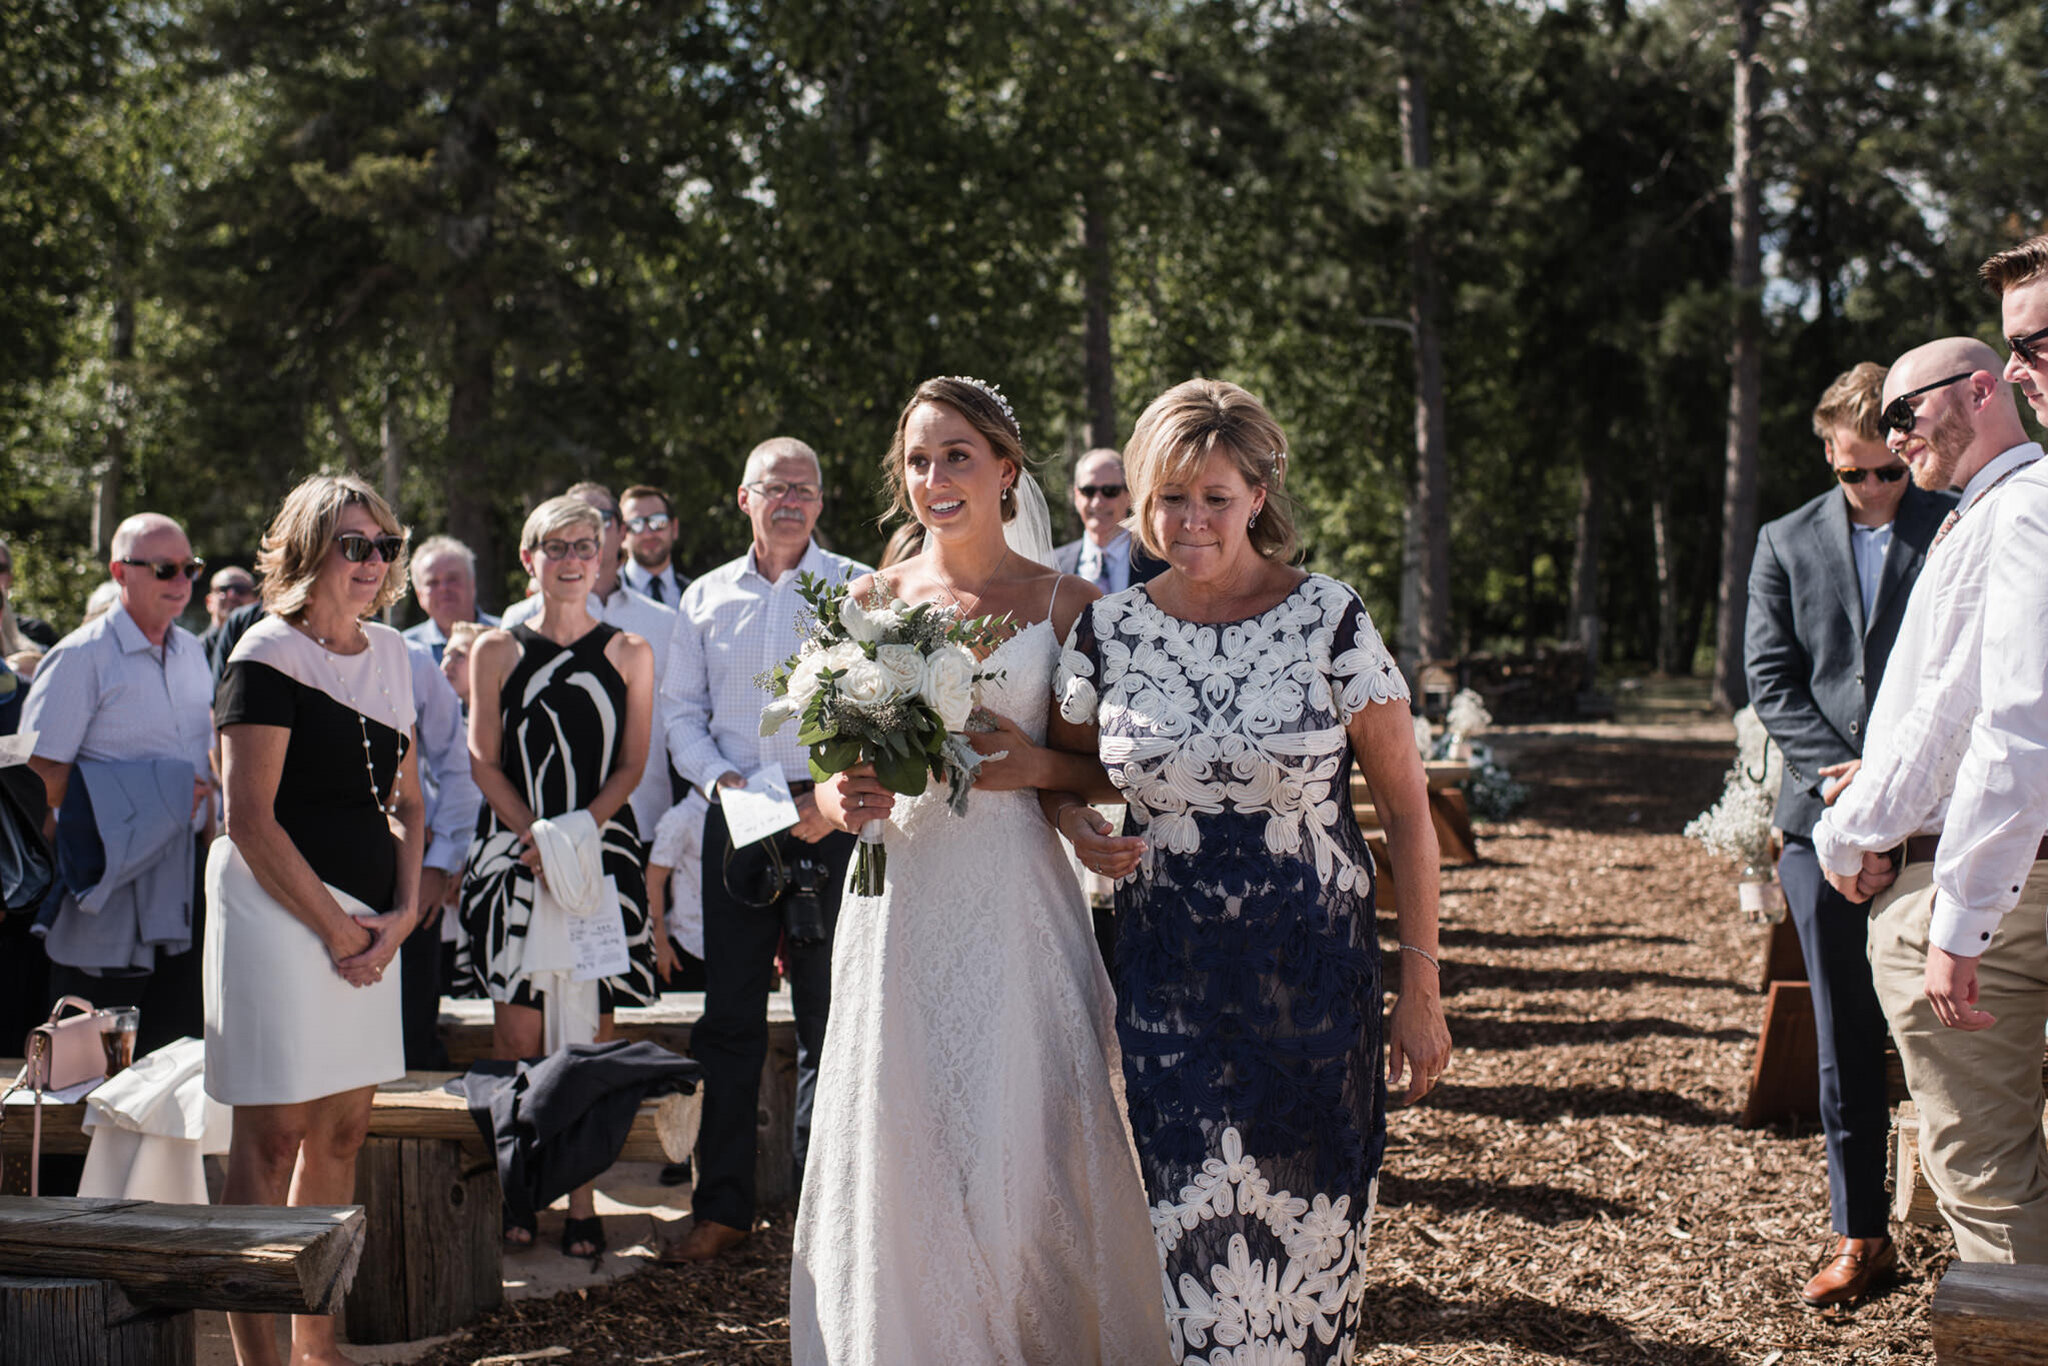 622-mother-walking-bride-down-aisle-wedding-outdoor-ceremony-cottage-ontario-toronto.jpg